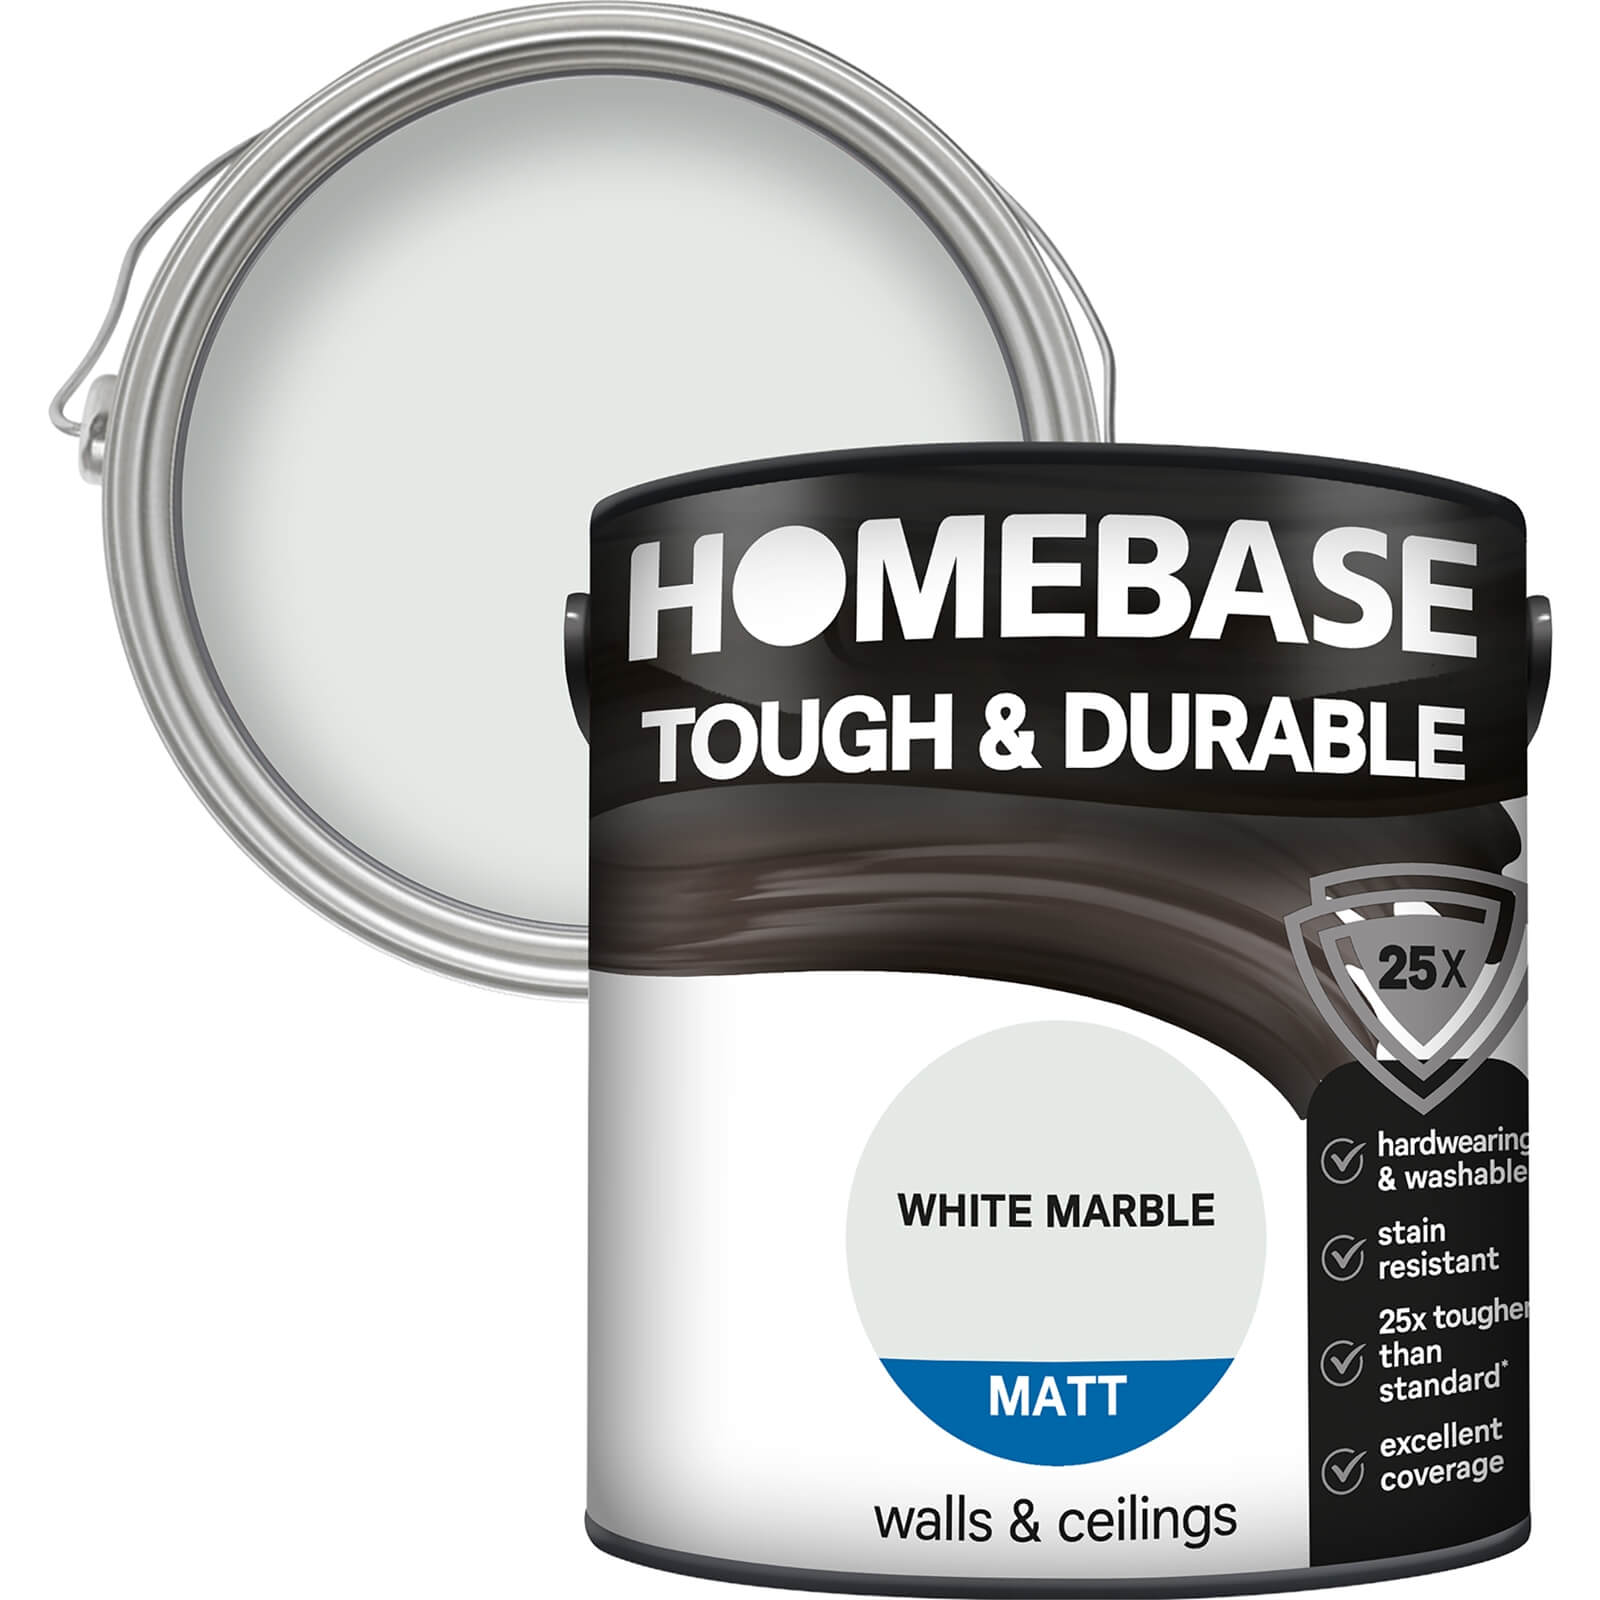 Homebase Tough & Durable Matt Paint White Marble - 2.5L